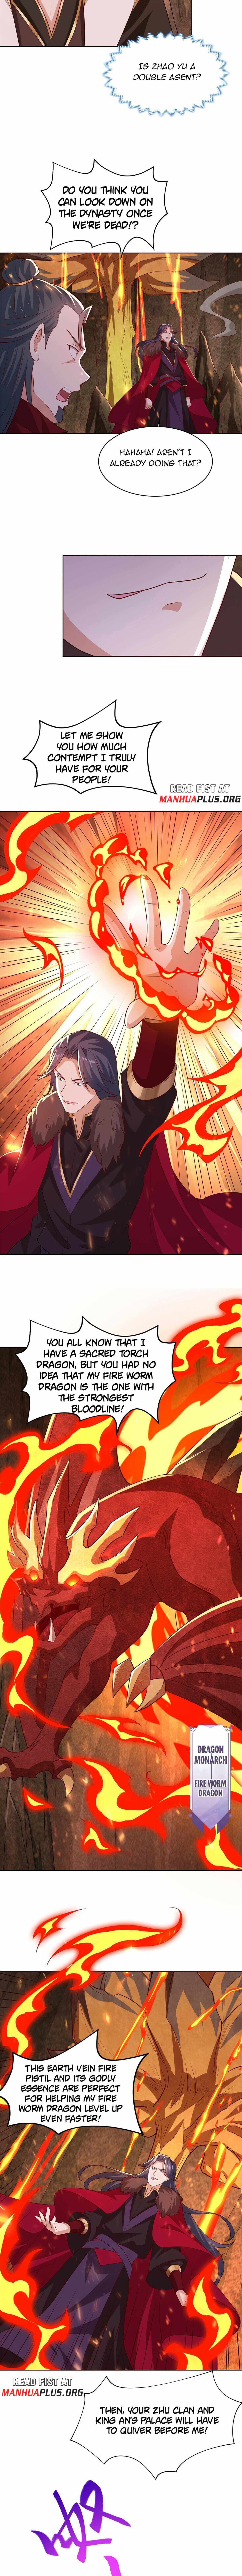 Dragon Master Chapter 245-eng-li - Page 4